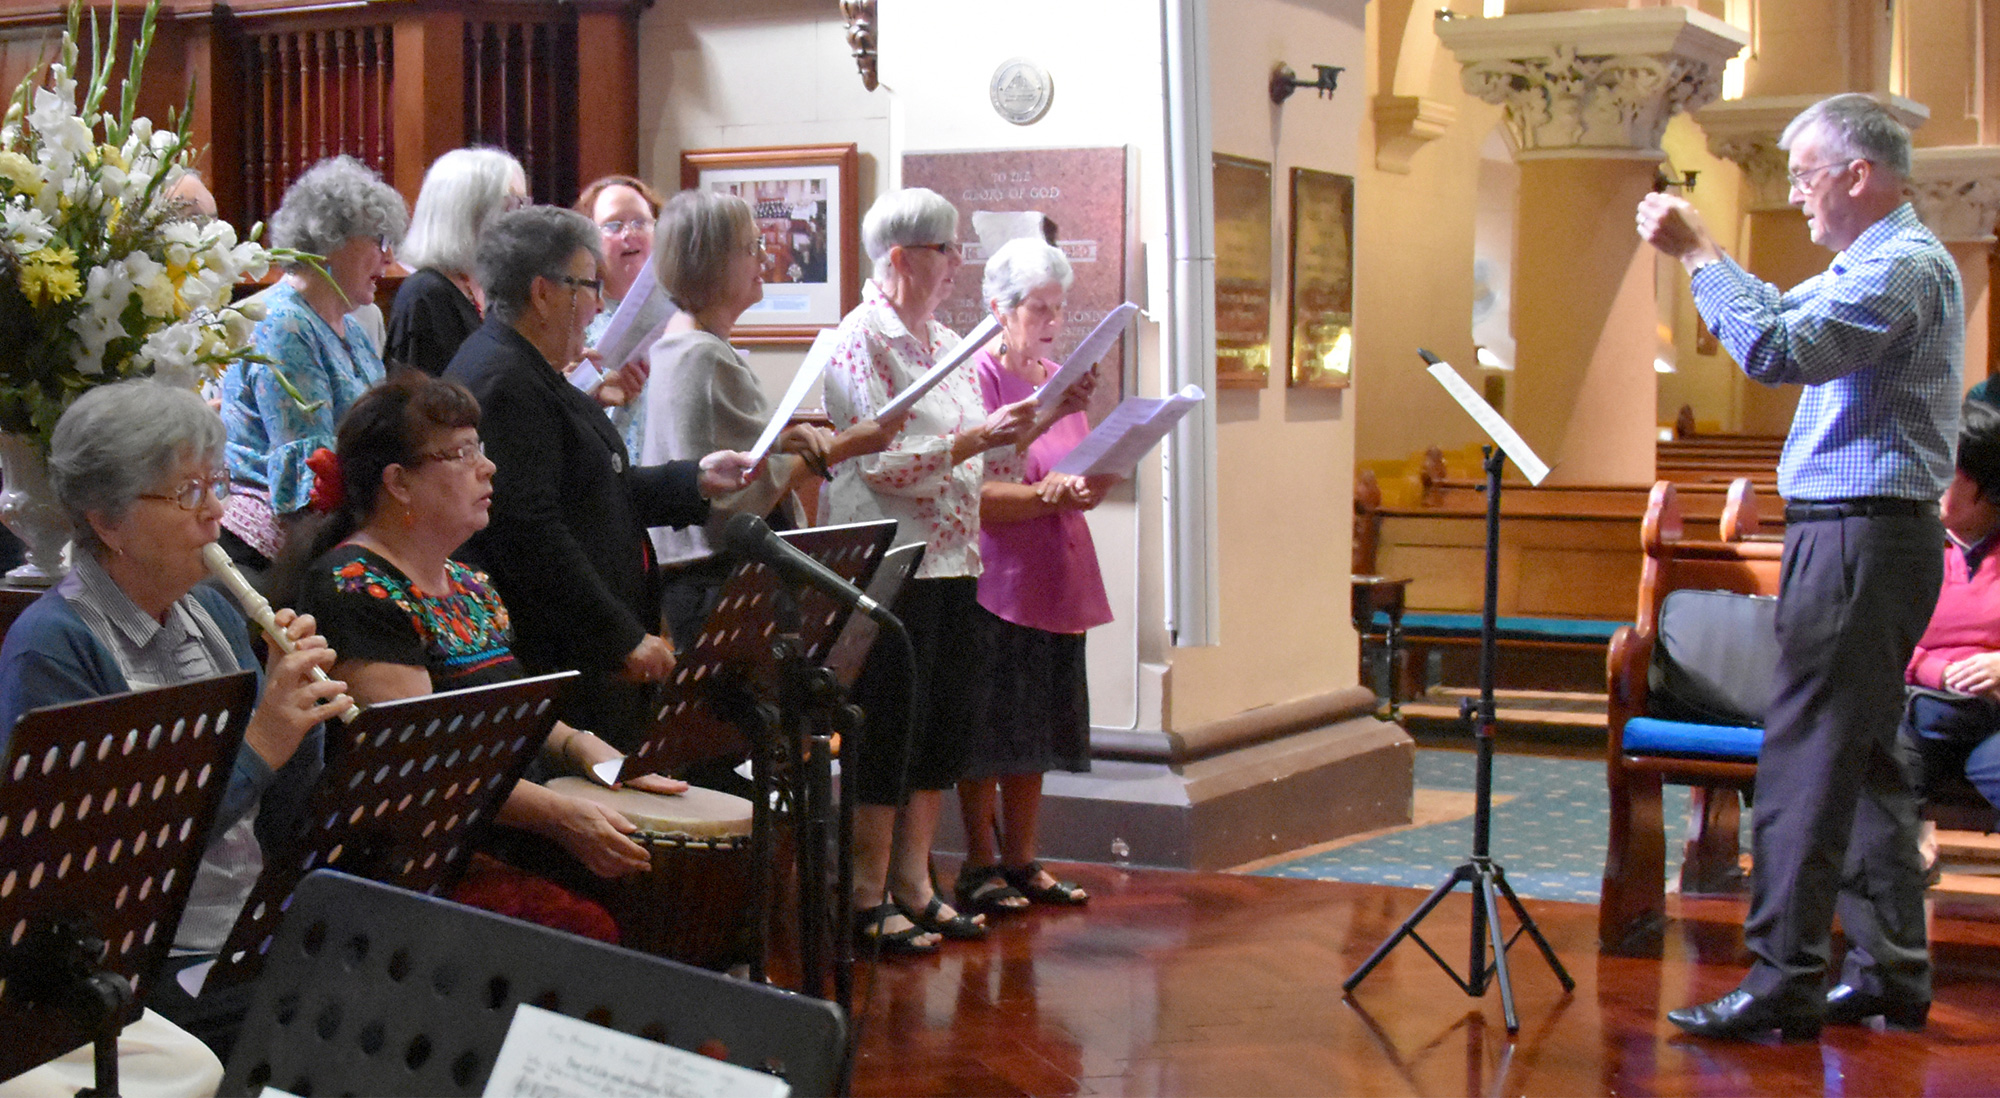 Choir group singing